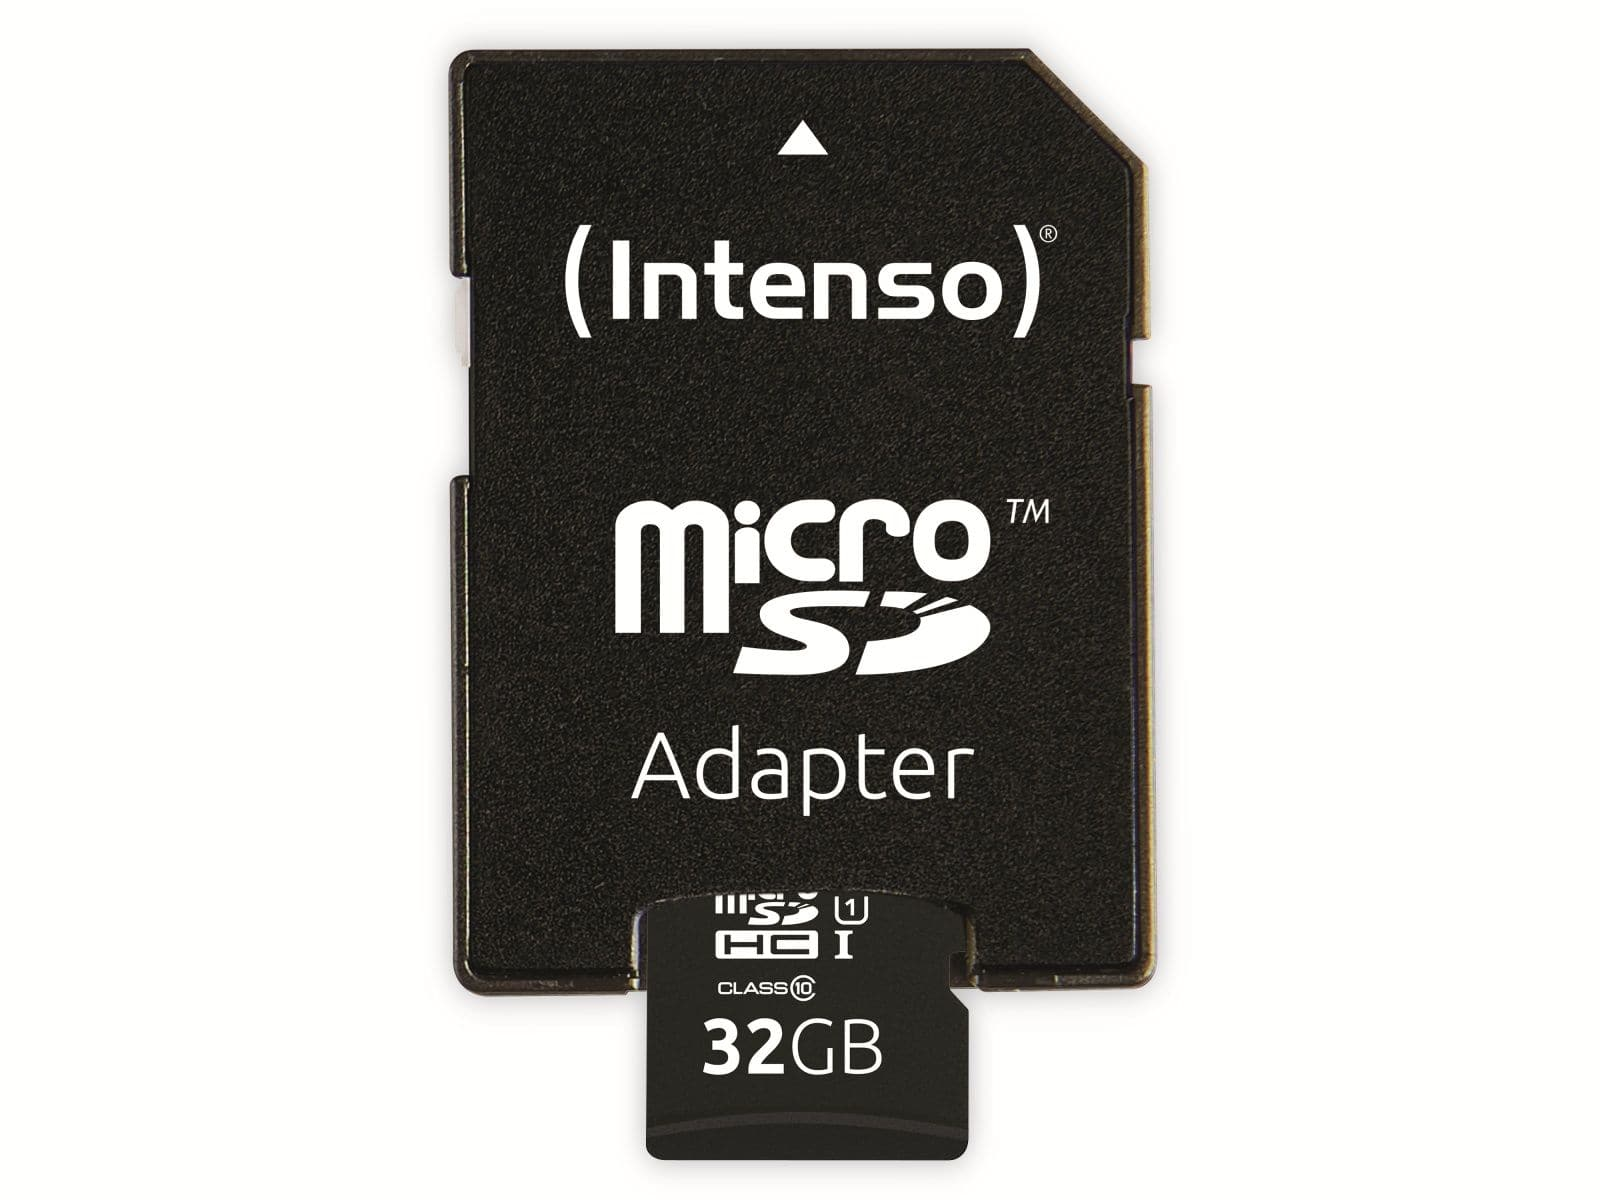 INTENSO Intenso microSD Card Micro-SDHC MB/s GB, 32 Professional, SDHC 90 32GB Speicherkarte, UHS-I